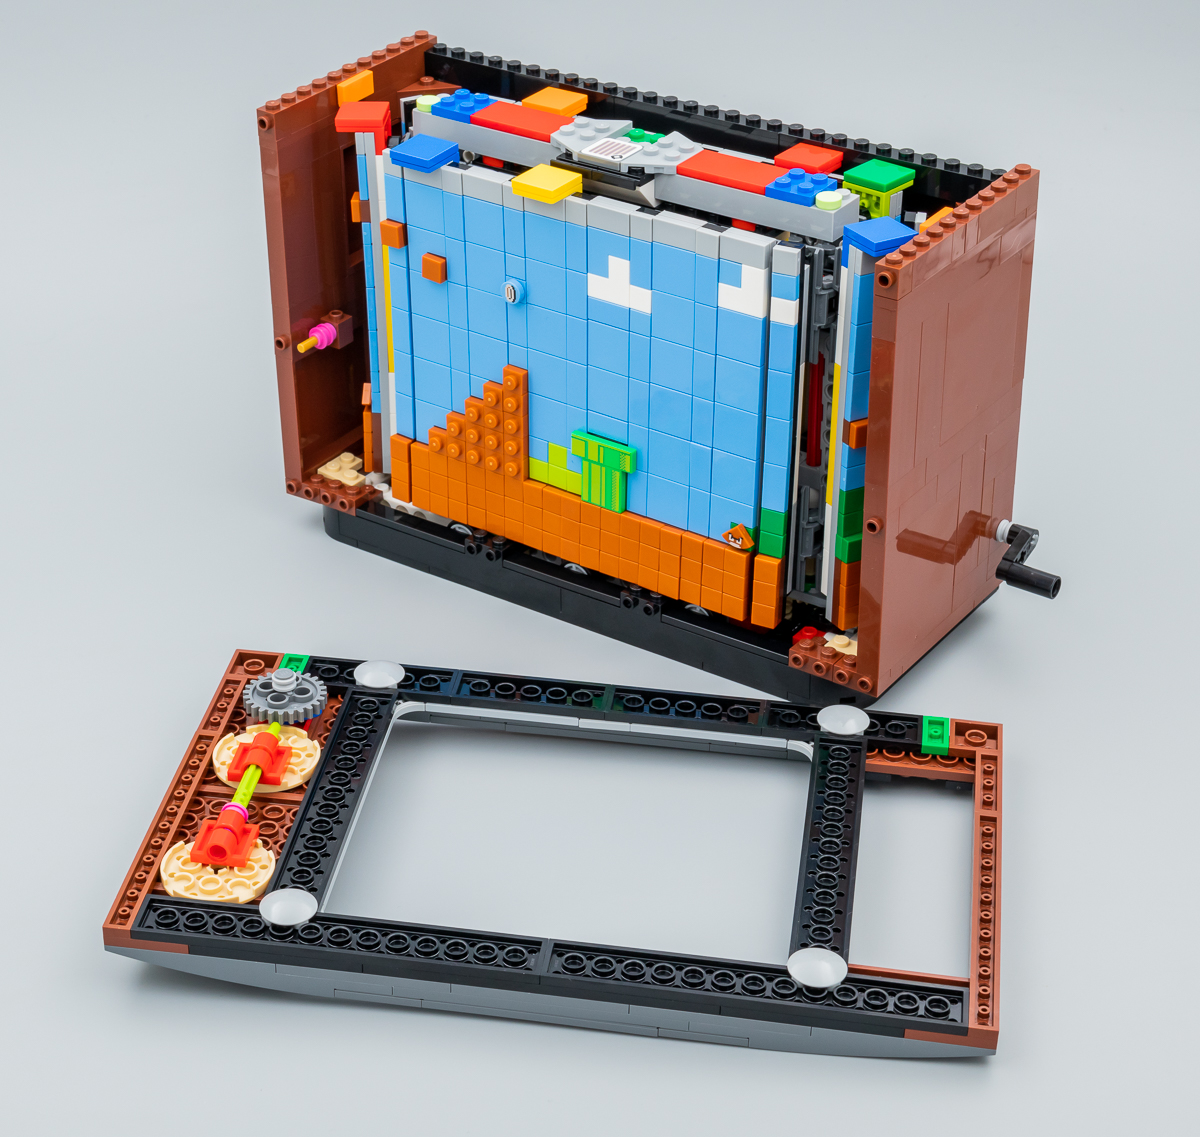 LEGO 71374 Nintendo Entertainment System review